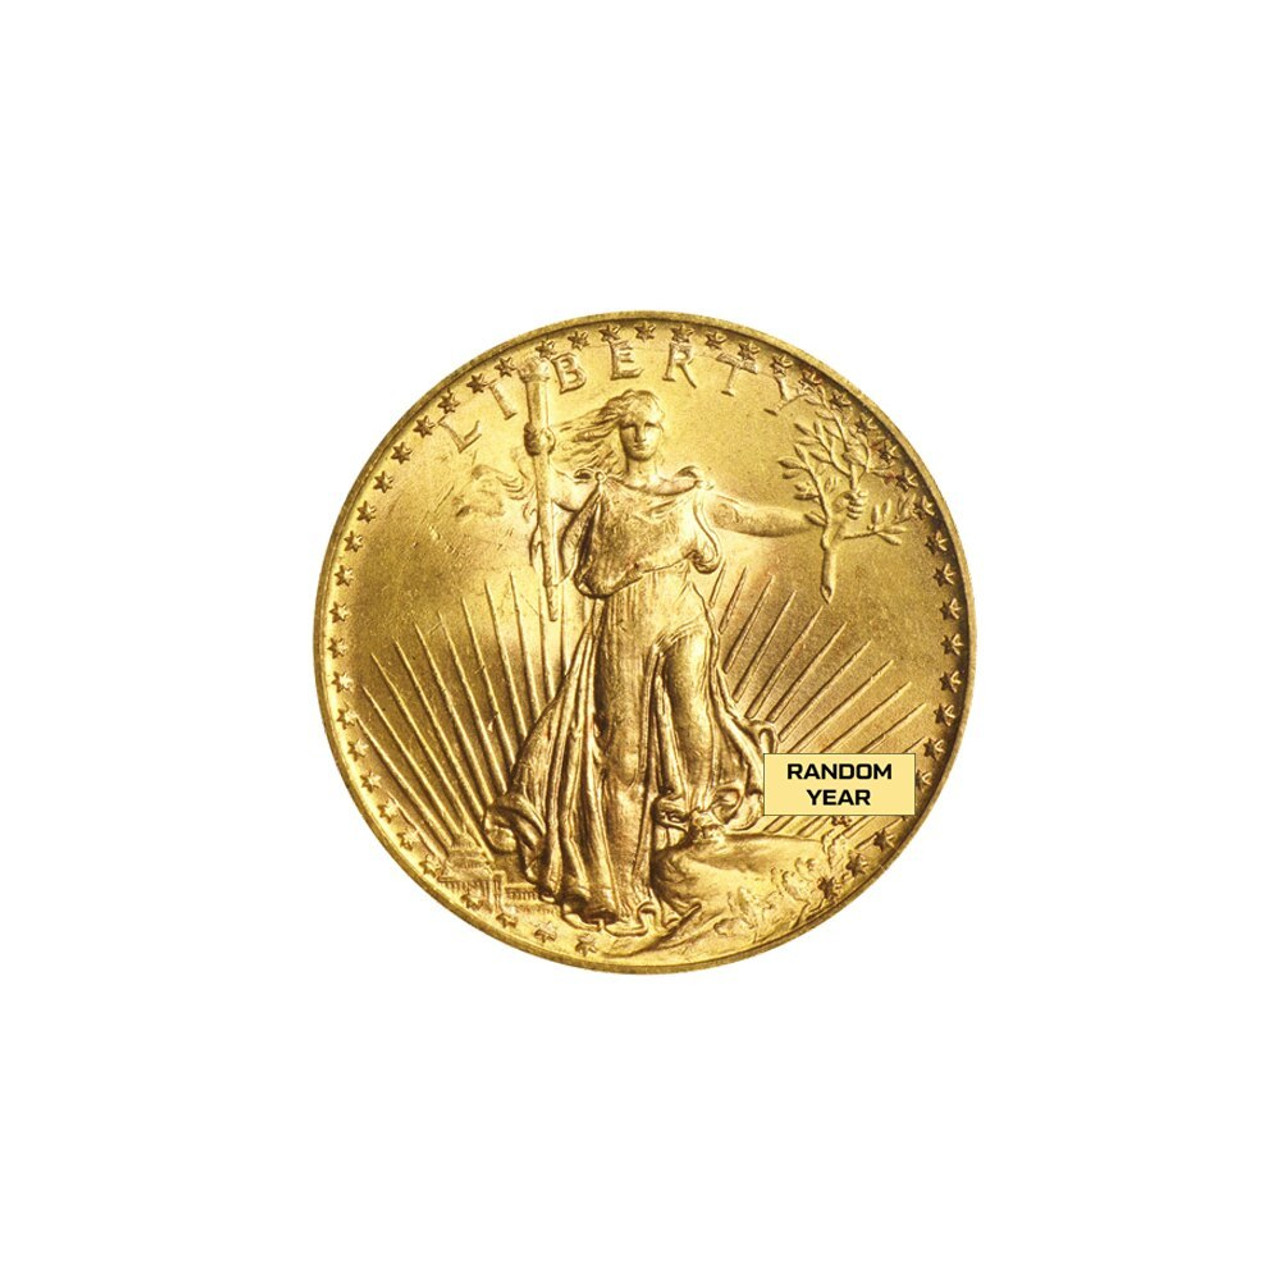 One St Gaudens Golden State Mint Coin Plectrum.